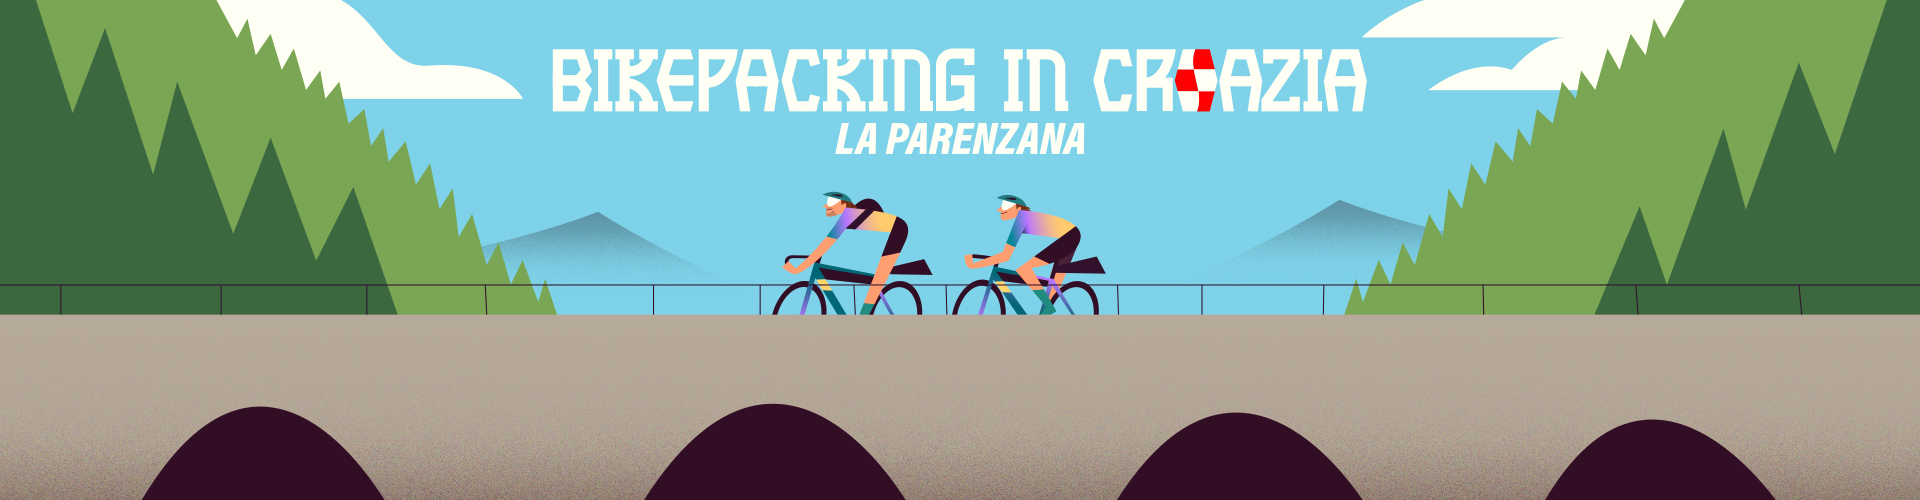 Bikepacking in Croazia Parenzana in bici